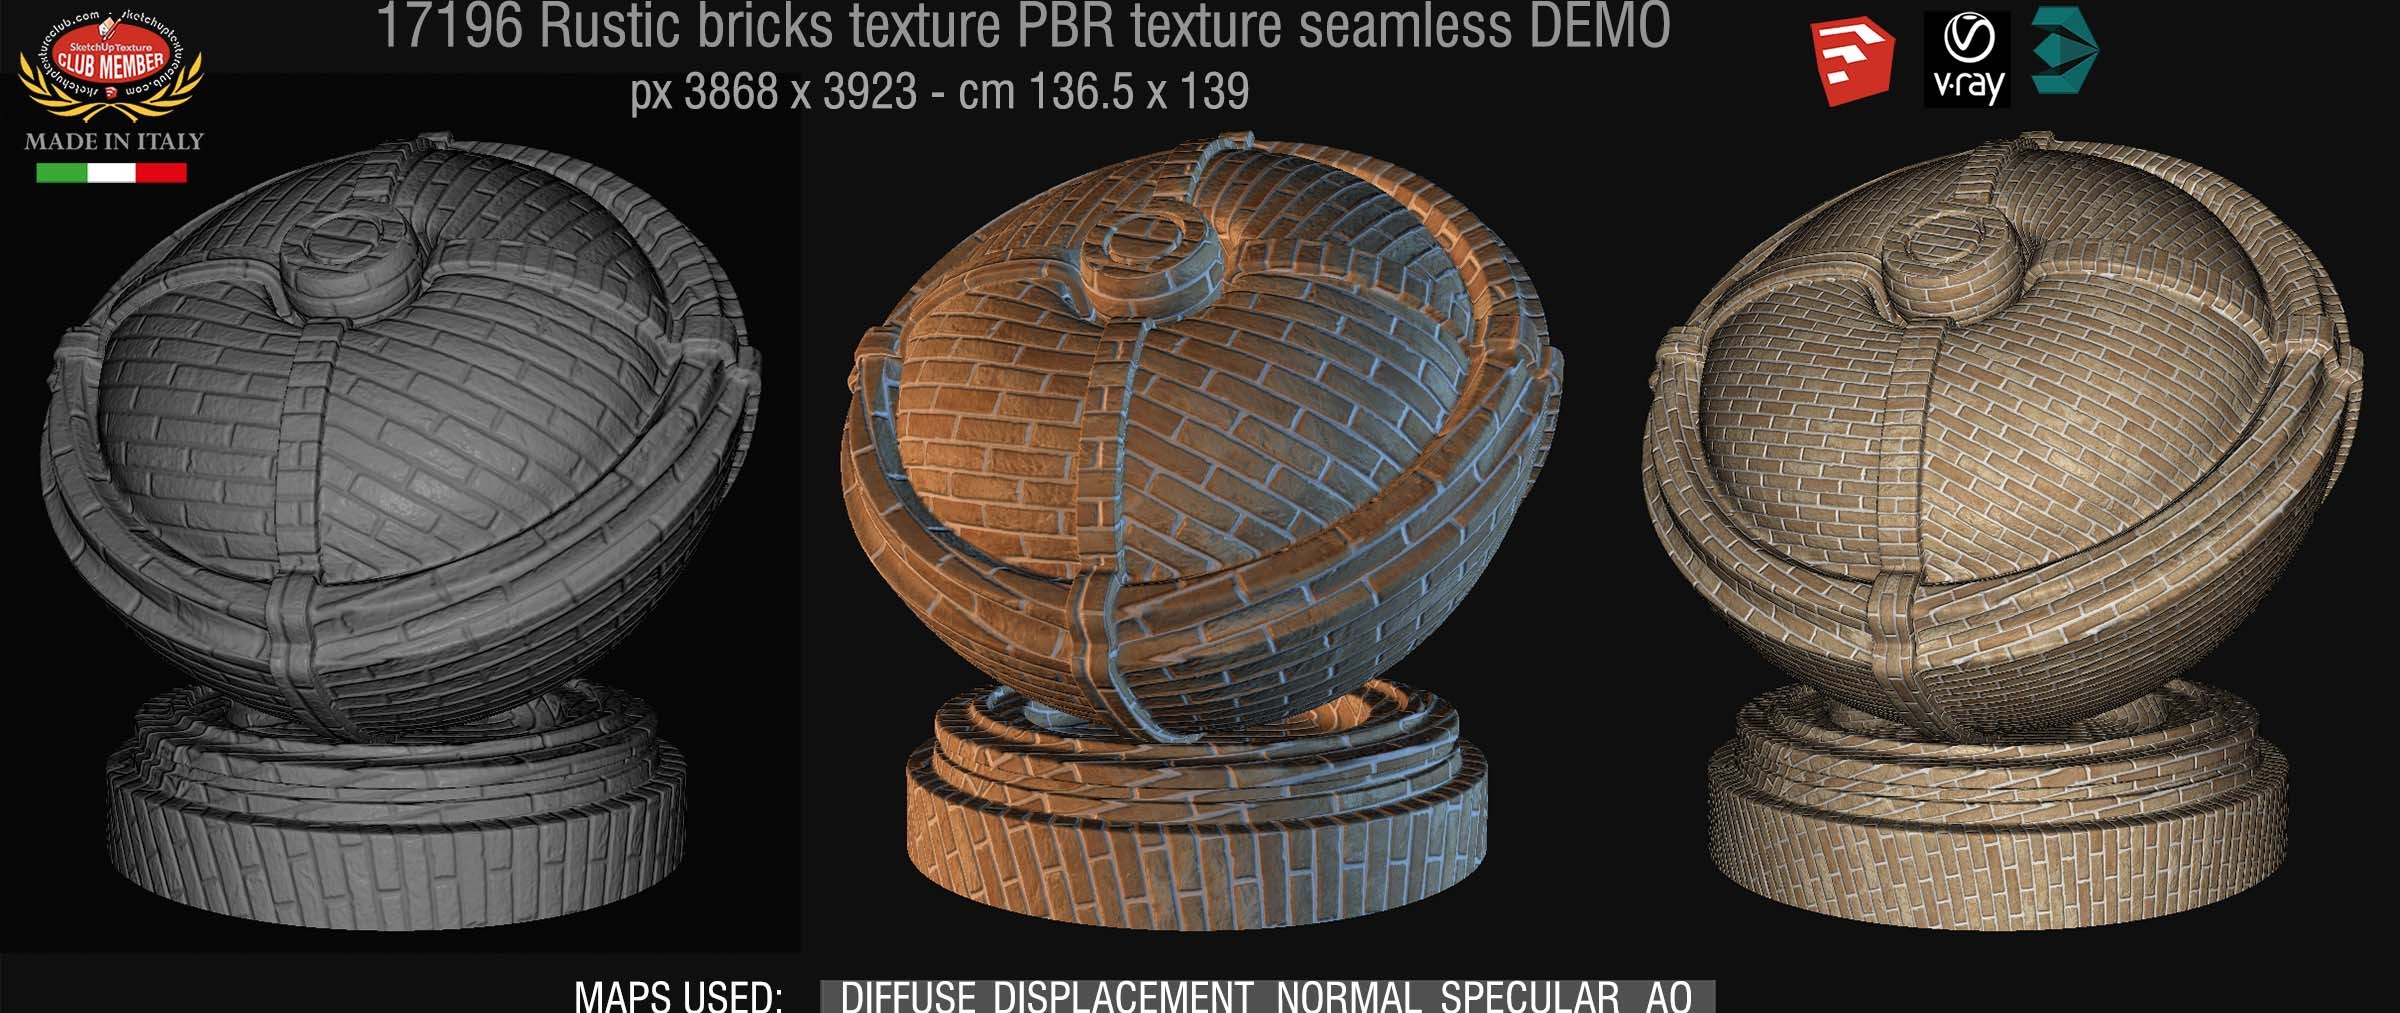 17196 rustic bricks PBR texture seamless DEMO